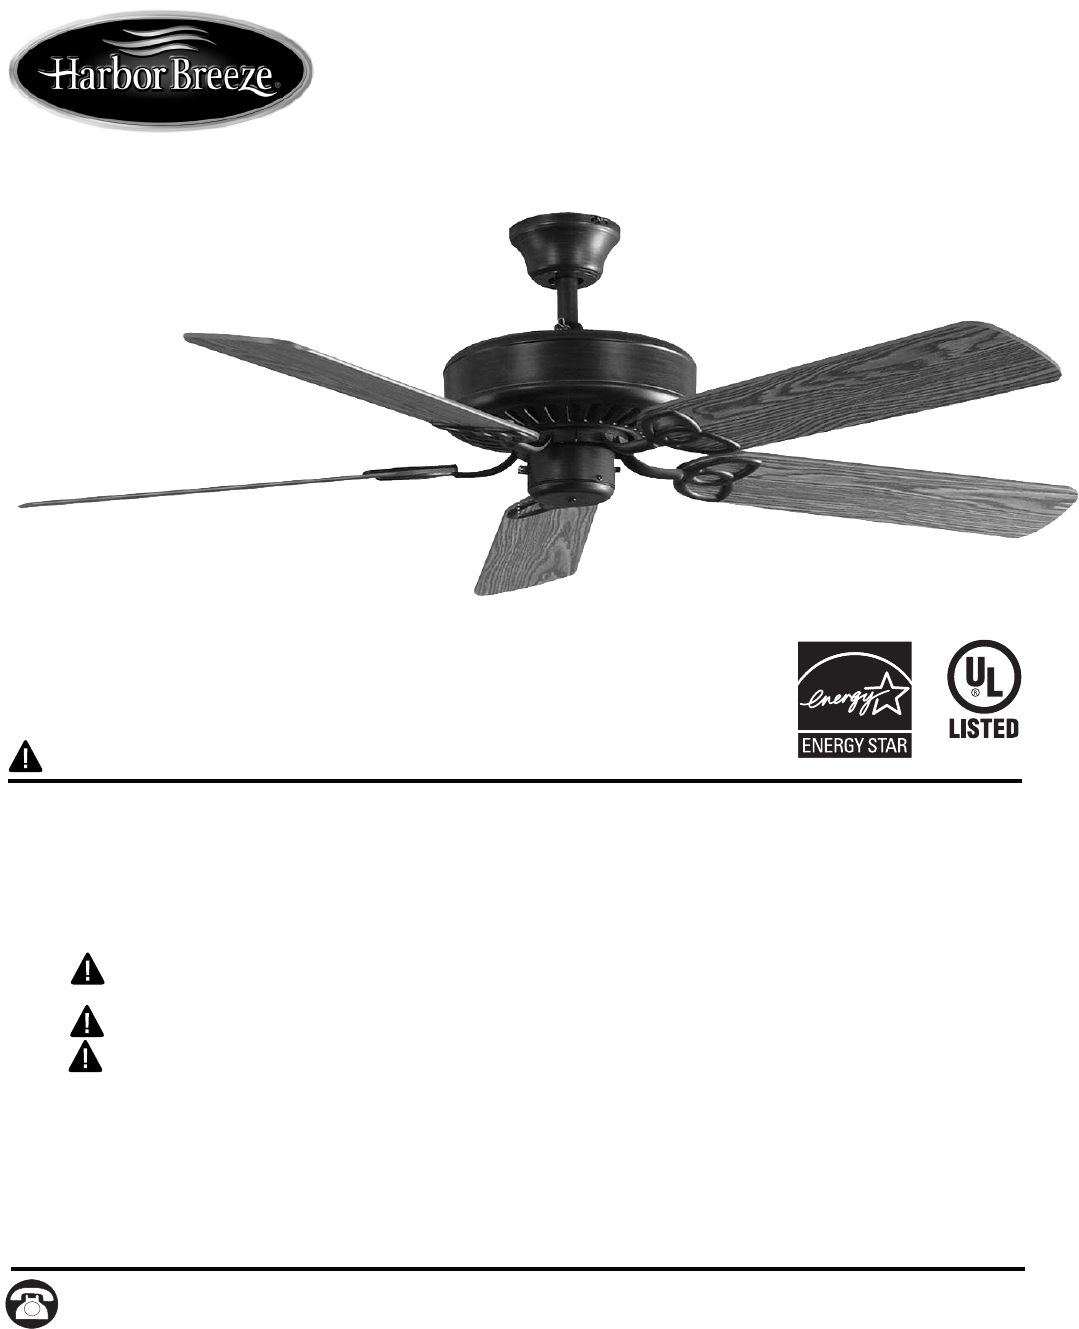 Harbor Breeze Ceiling Fan Manual Model Bdb52ww5p Pdf pertaining to size 1079 X 1329